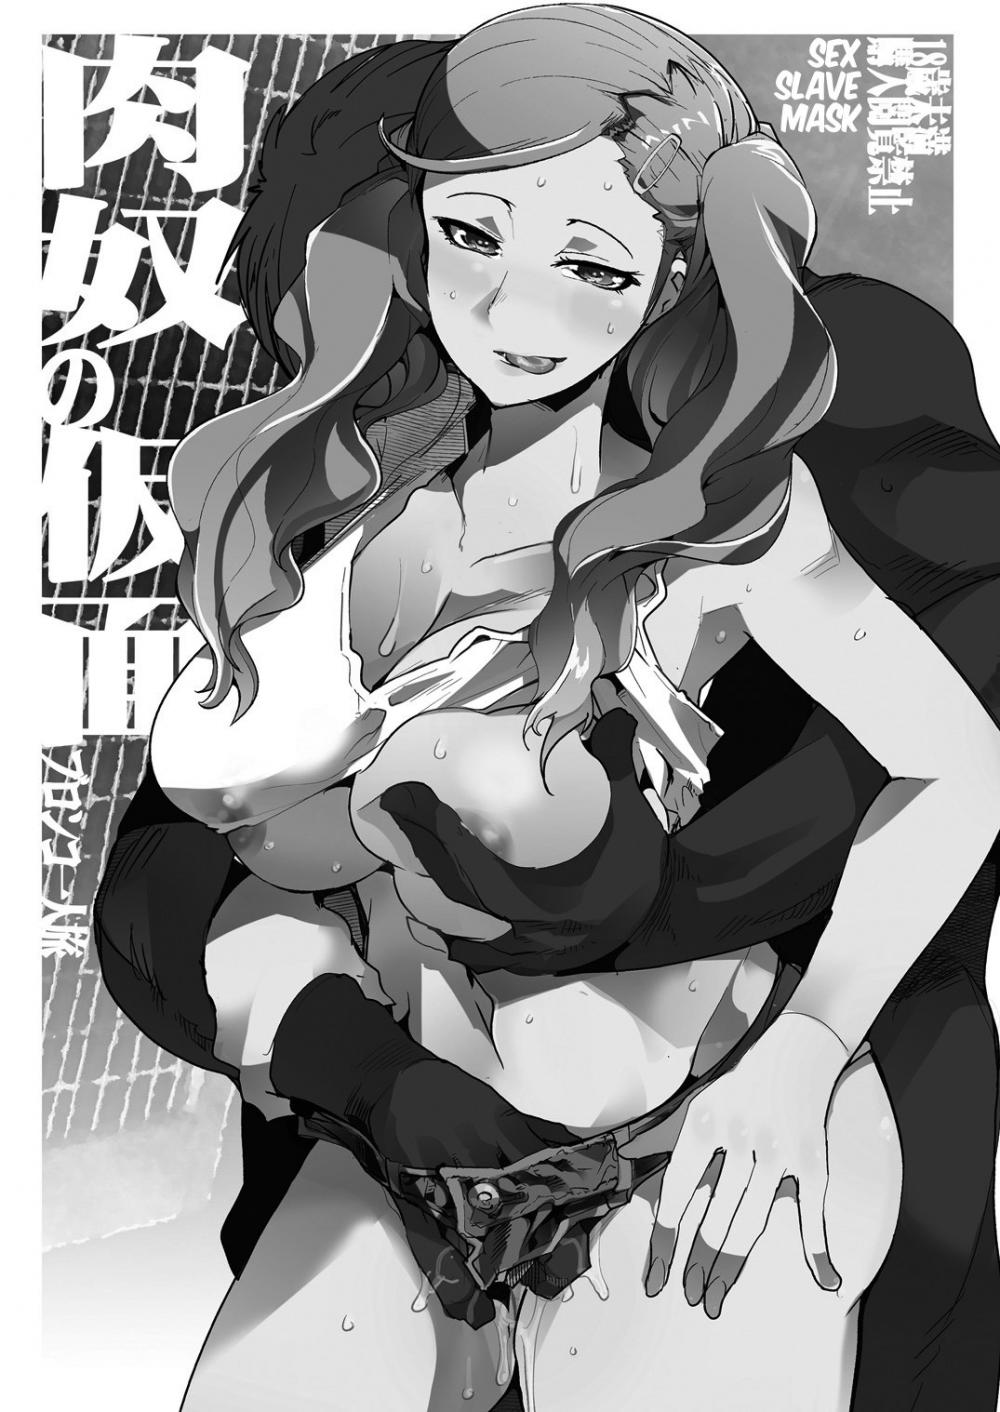 Hentai Manga Comic-Sex Slave Mask-Read-2